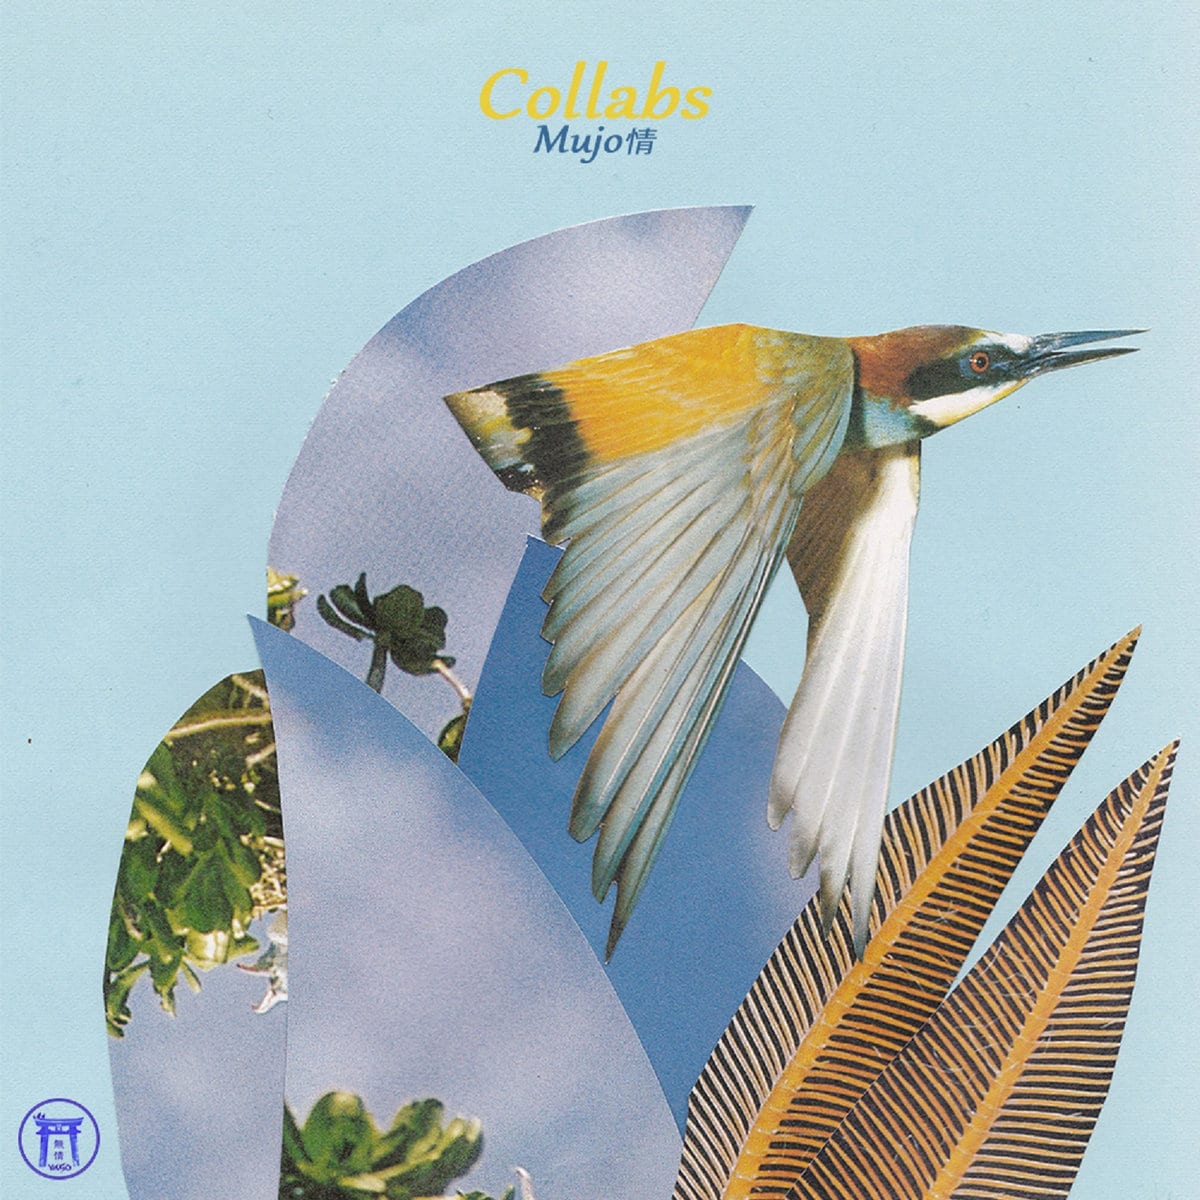 Mujo情 - "Collabs" (Release)